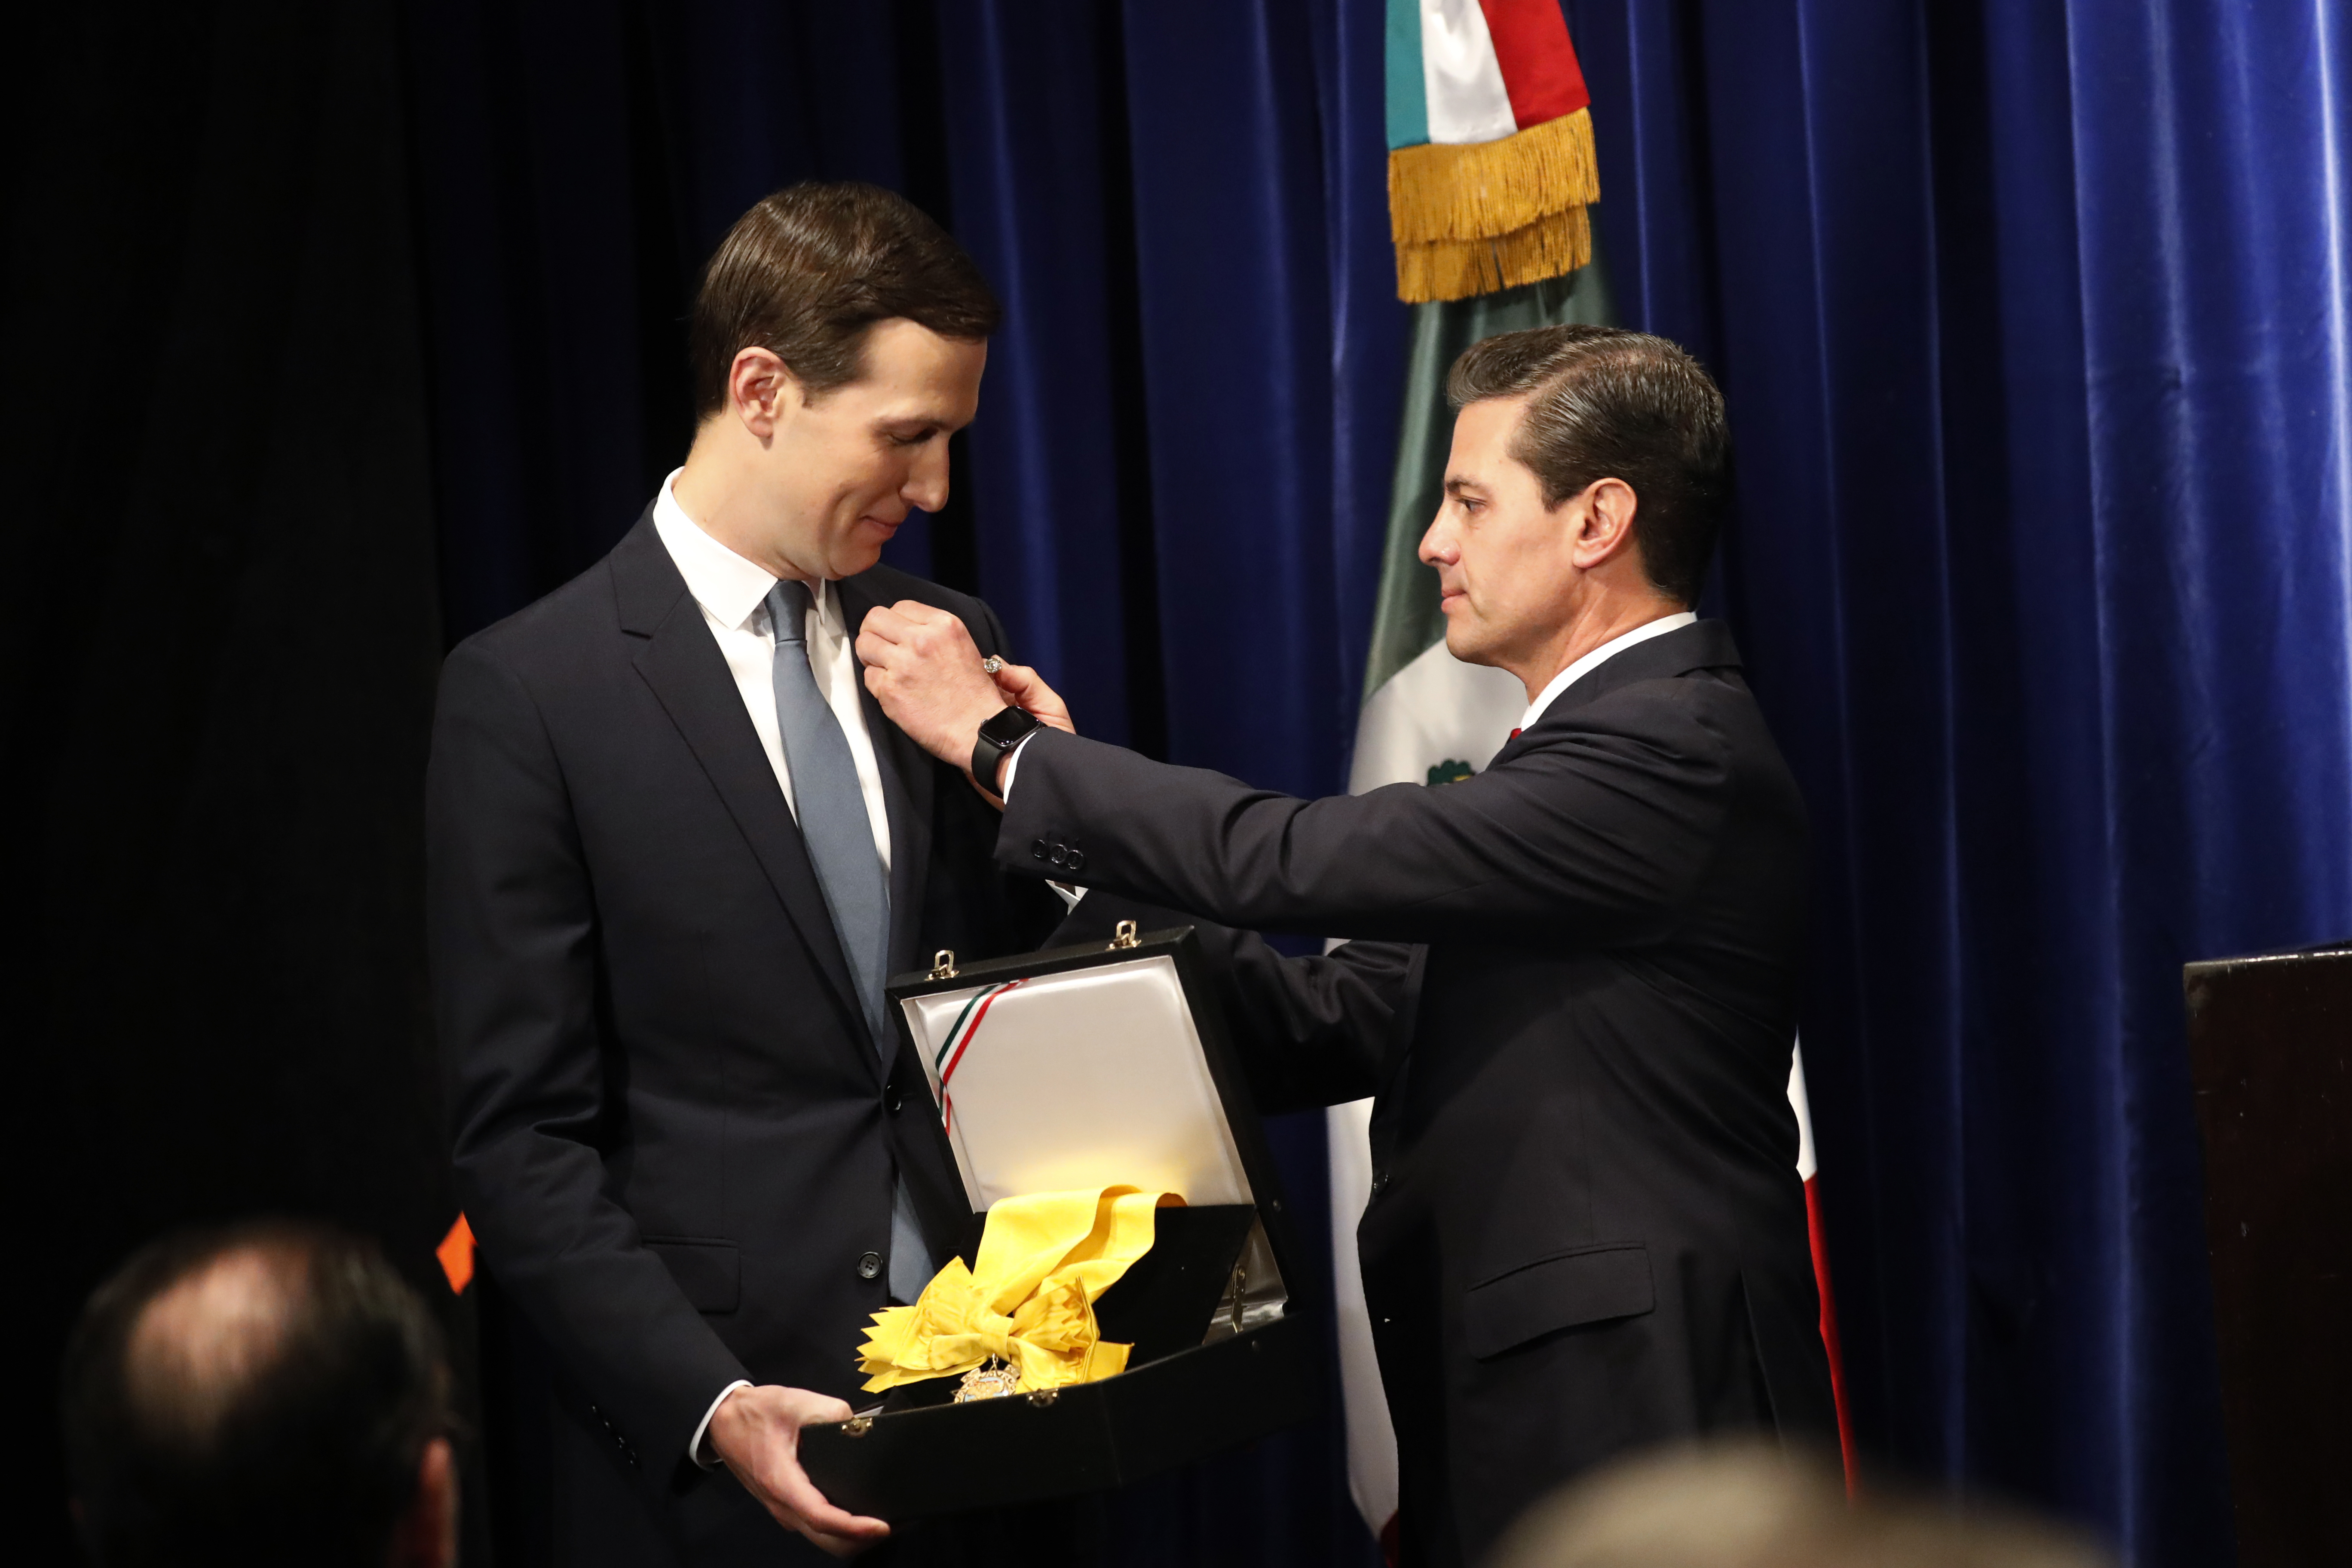 Mexican President Enrique Pena Neto, right, awards White House Senior Adviser Jared Kushner the Order of the Aztec Eagle